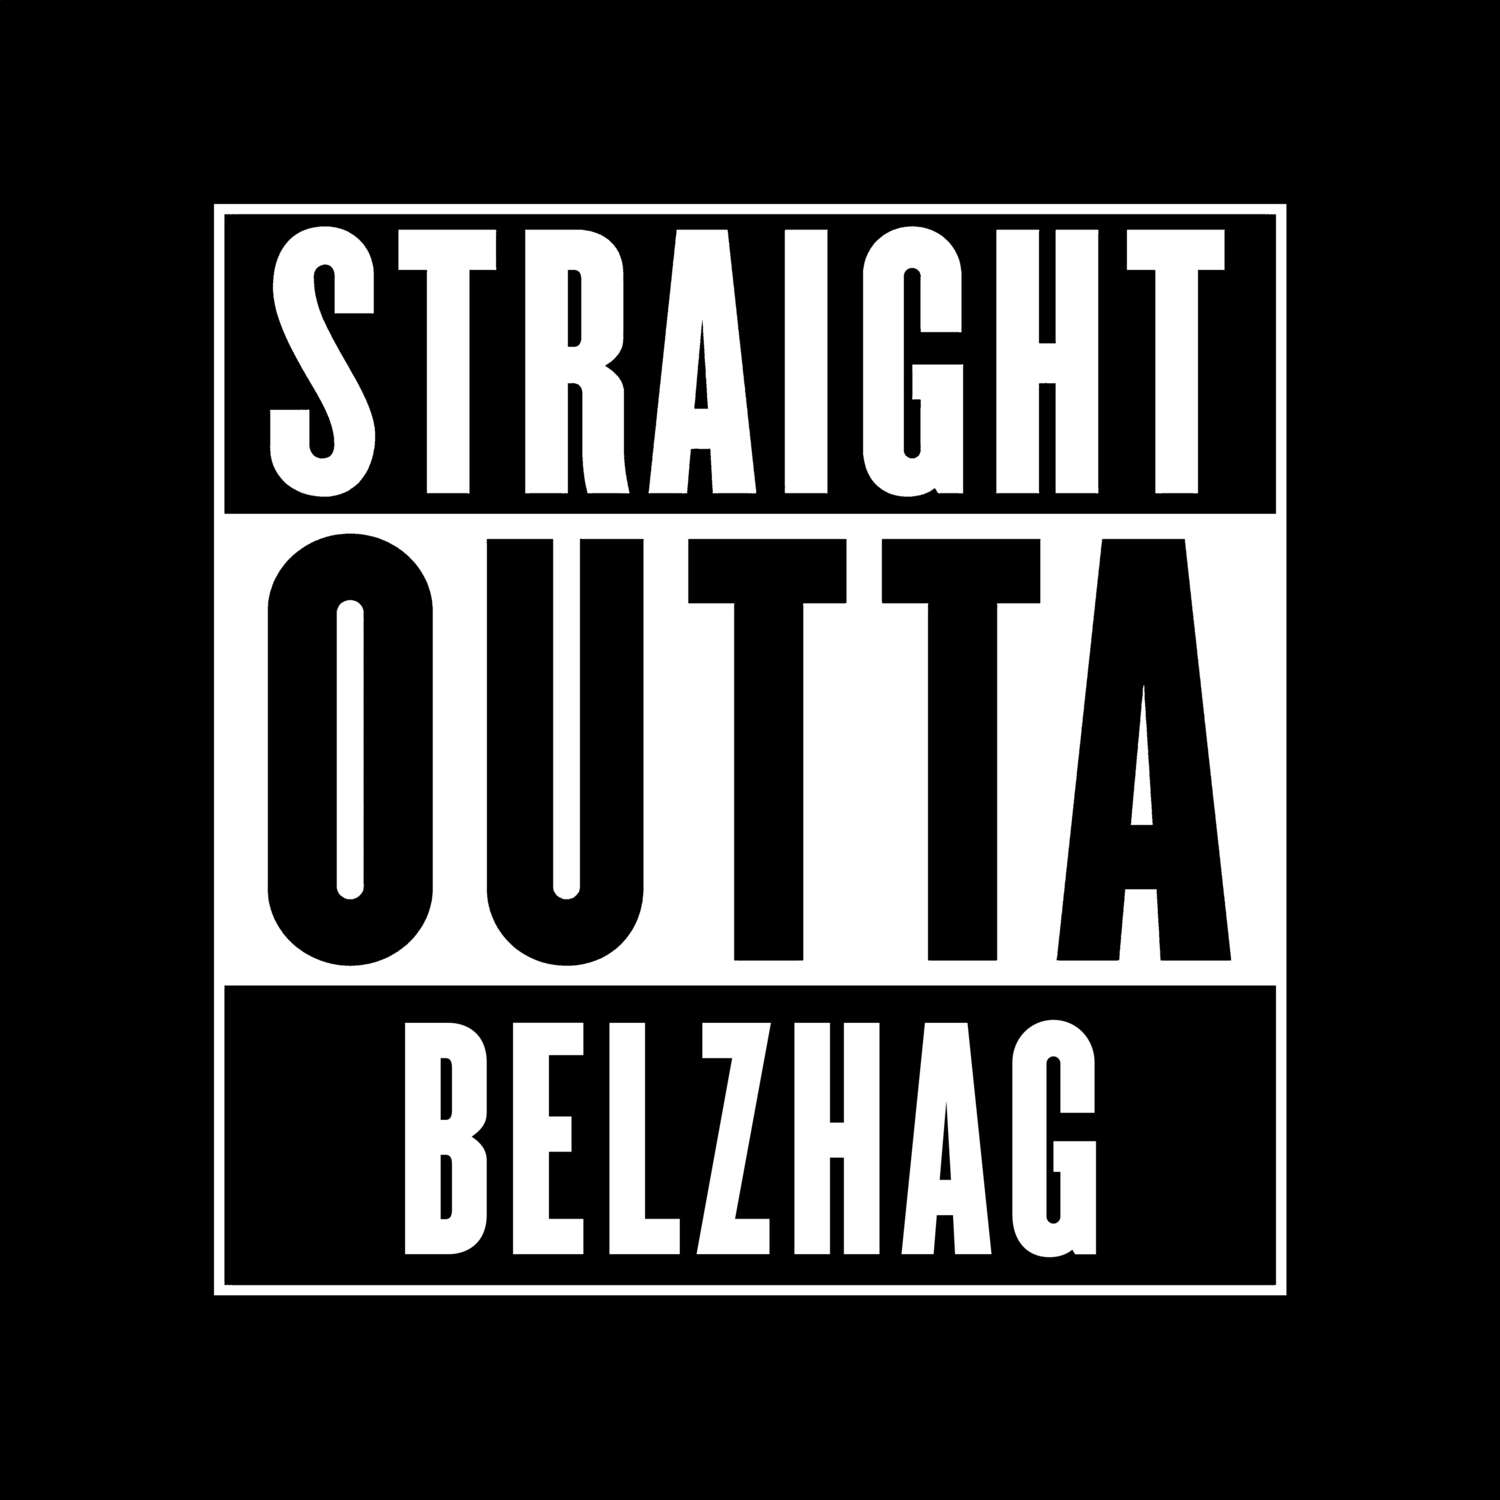 Belzhag T-Shirt »Straight Outta«